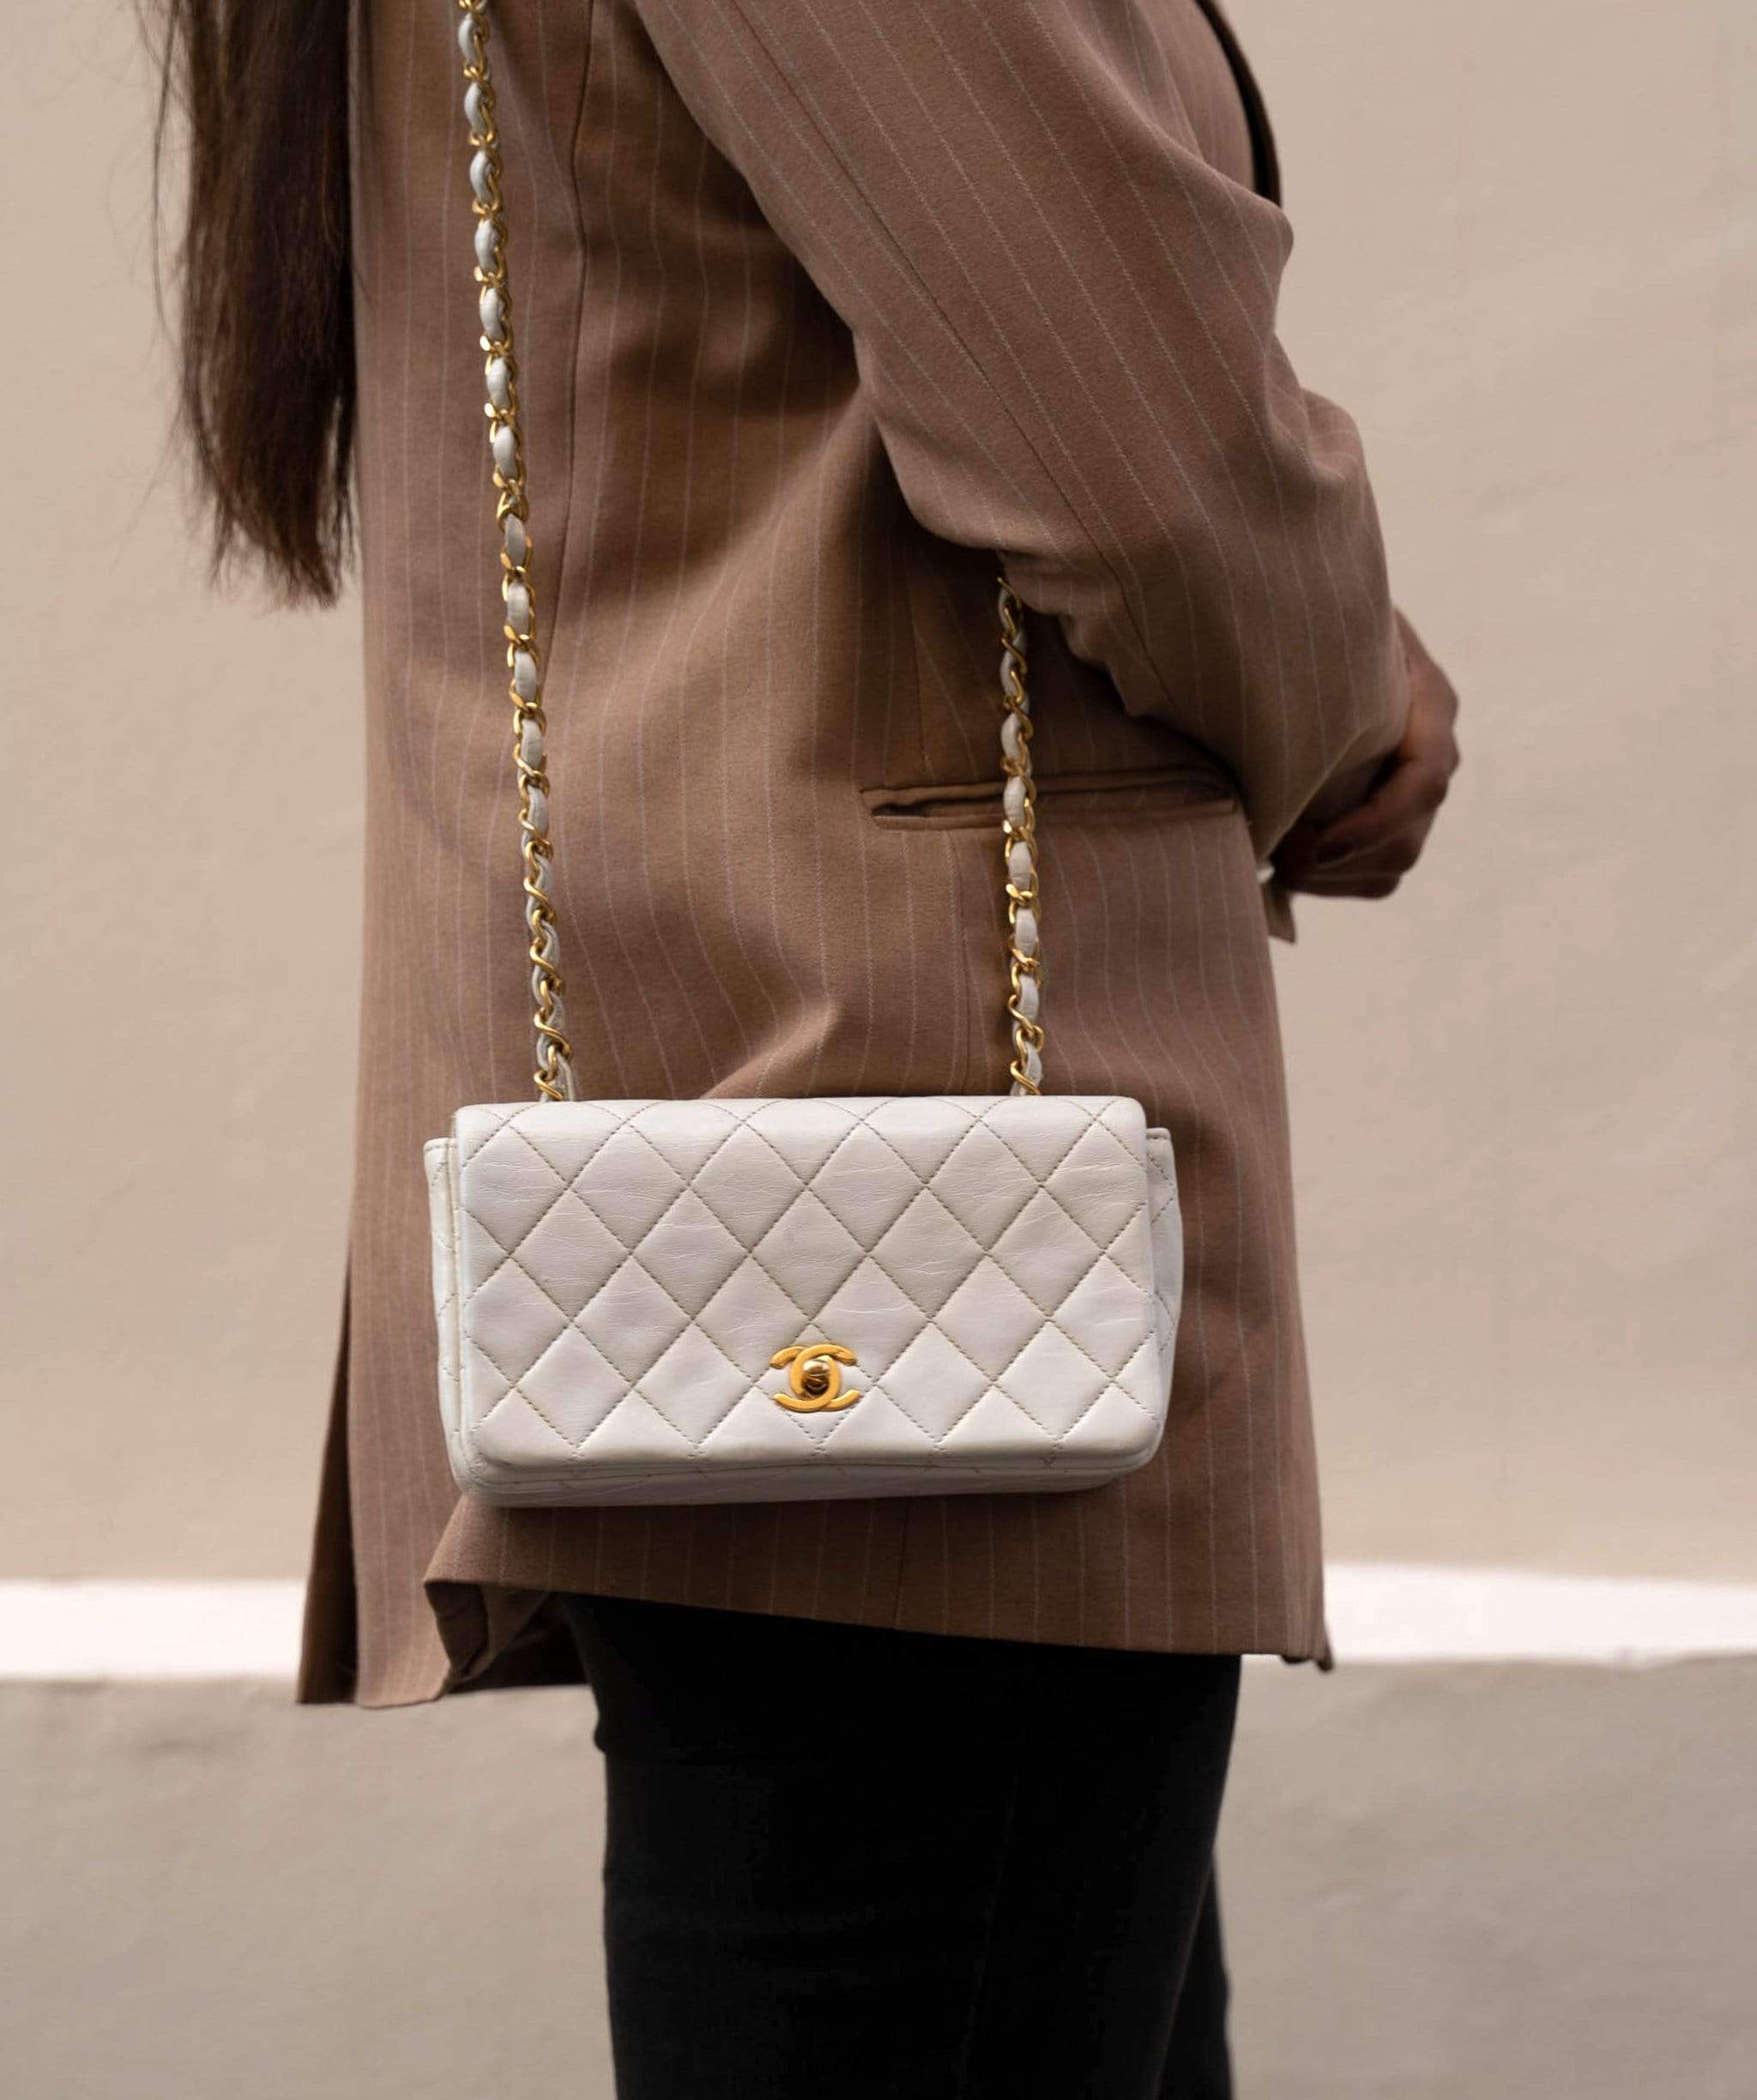 Chanel Small Full Flap Bag